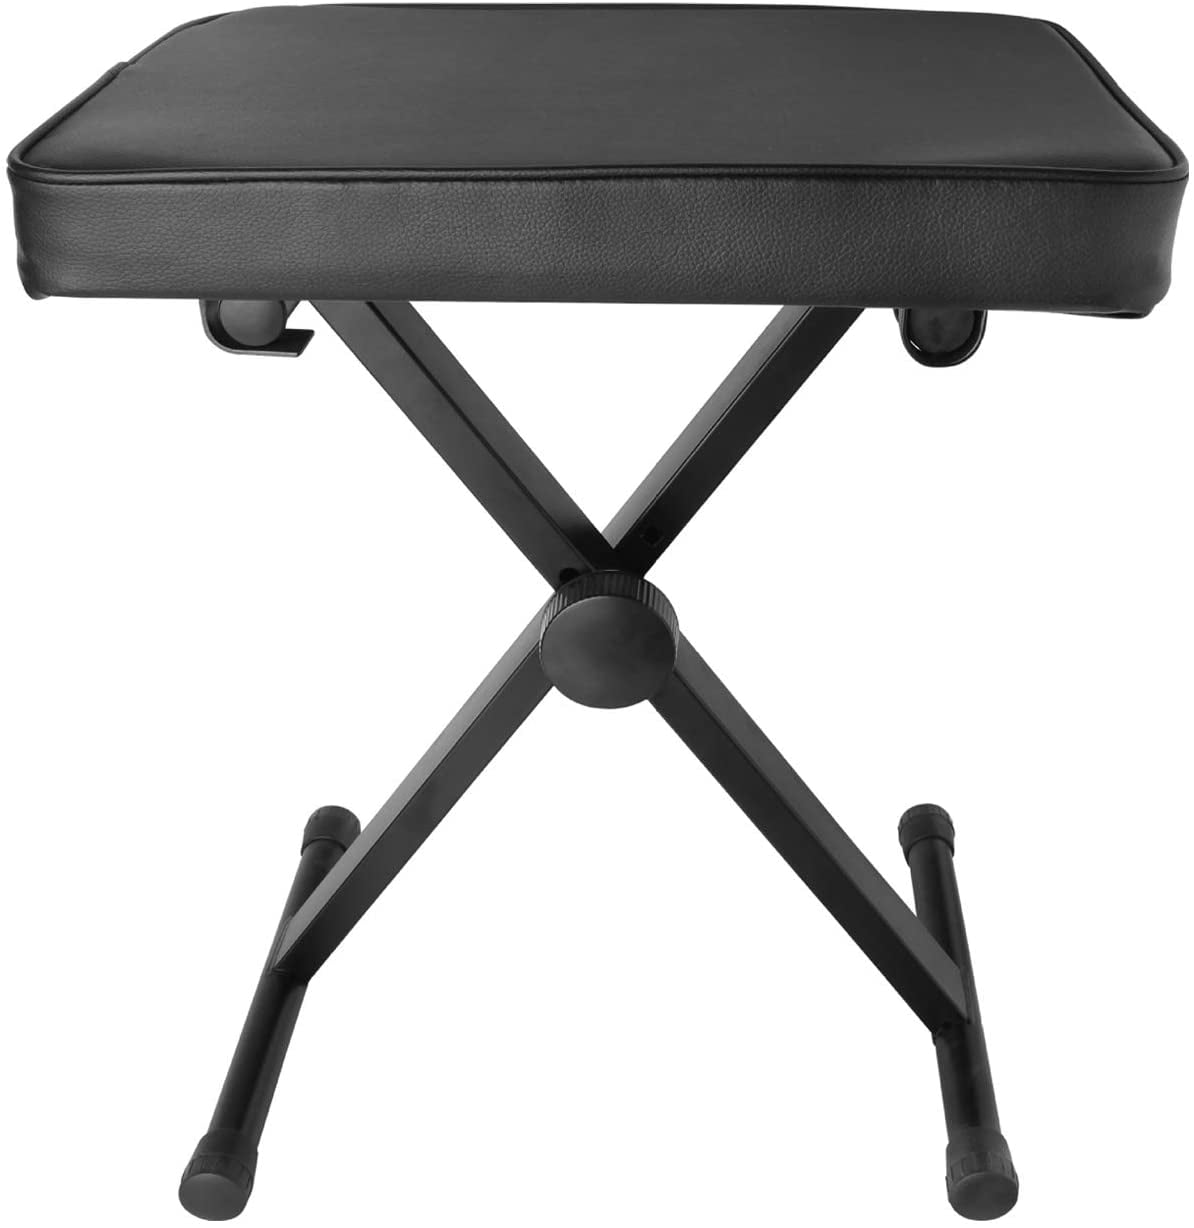 SSLine Adjustable Piano Keyboard Bench Leather Heavy Duty Deluxe Padded Keyboard Bench Seat Folding Stool Chair 